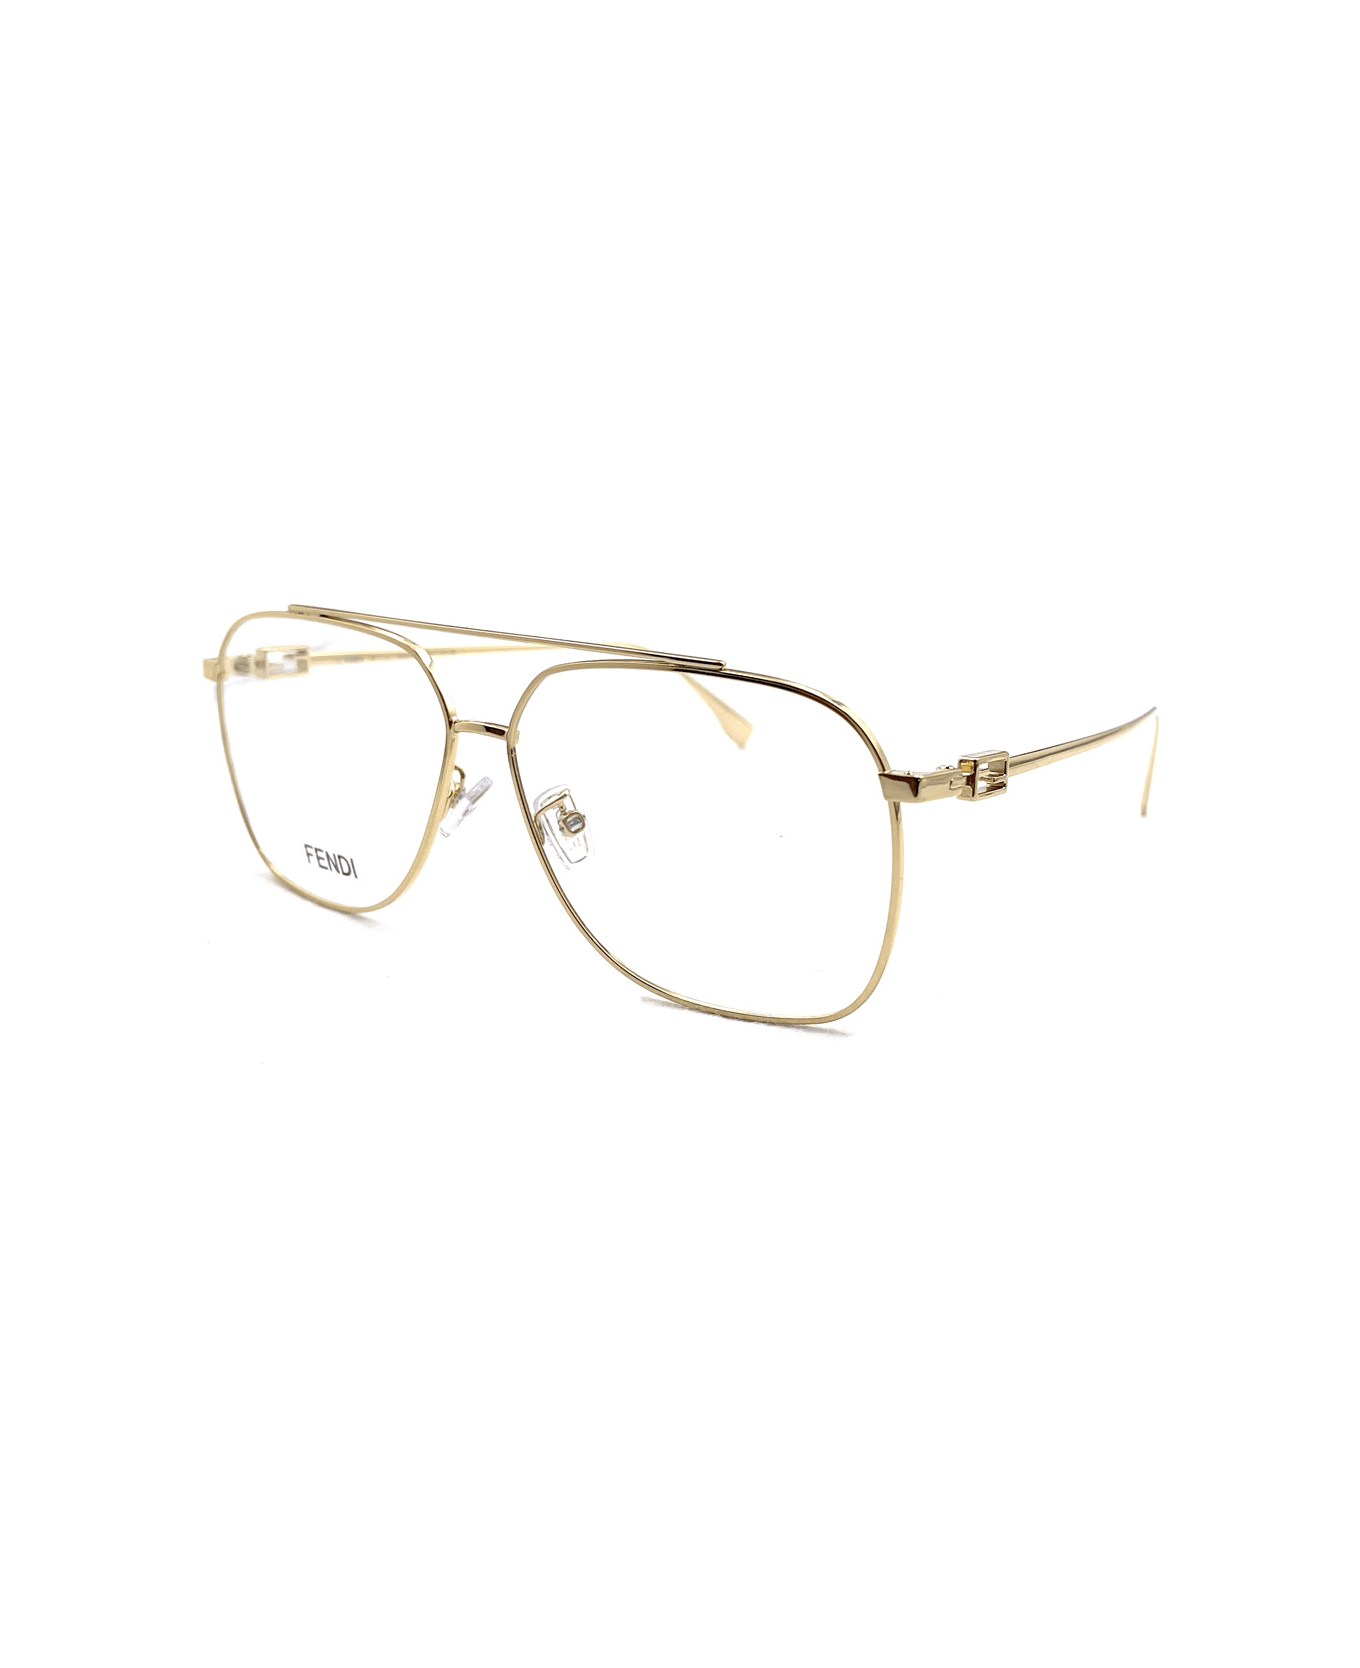 Fendi Eyewear Fe50083u 030 Glasses - Oro アイウェア